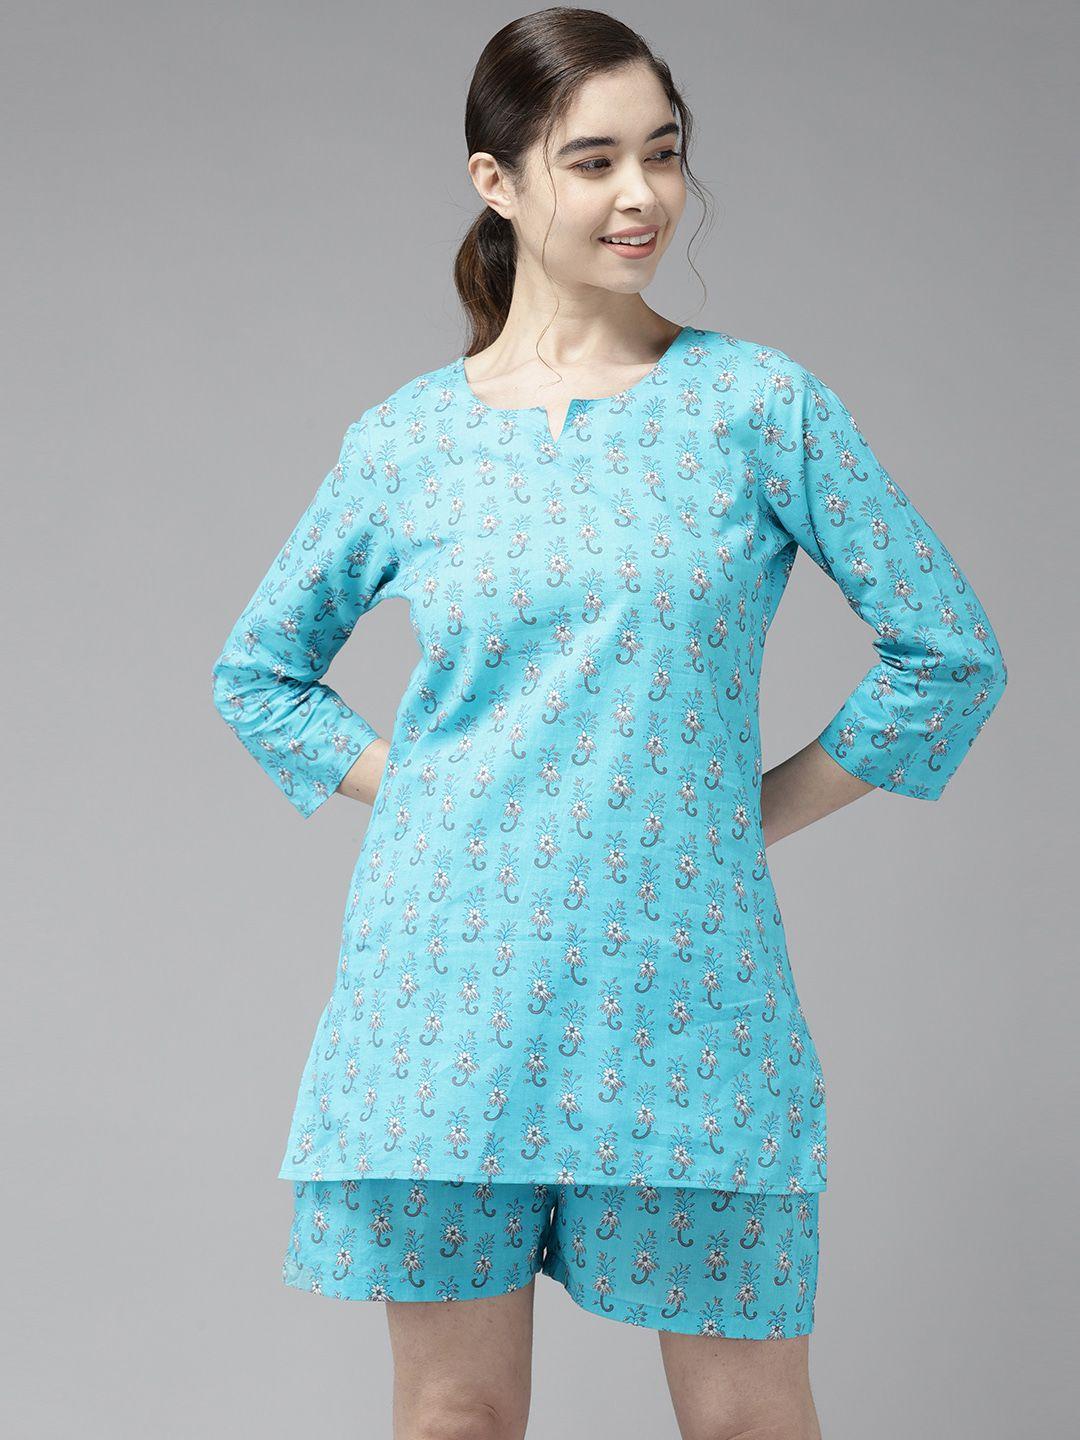 prakrti women turquoise blue printed cotton night suit